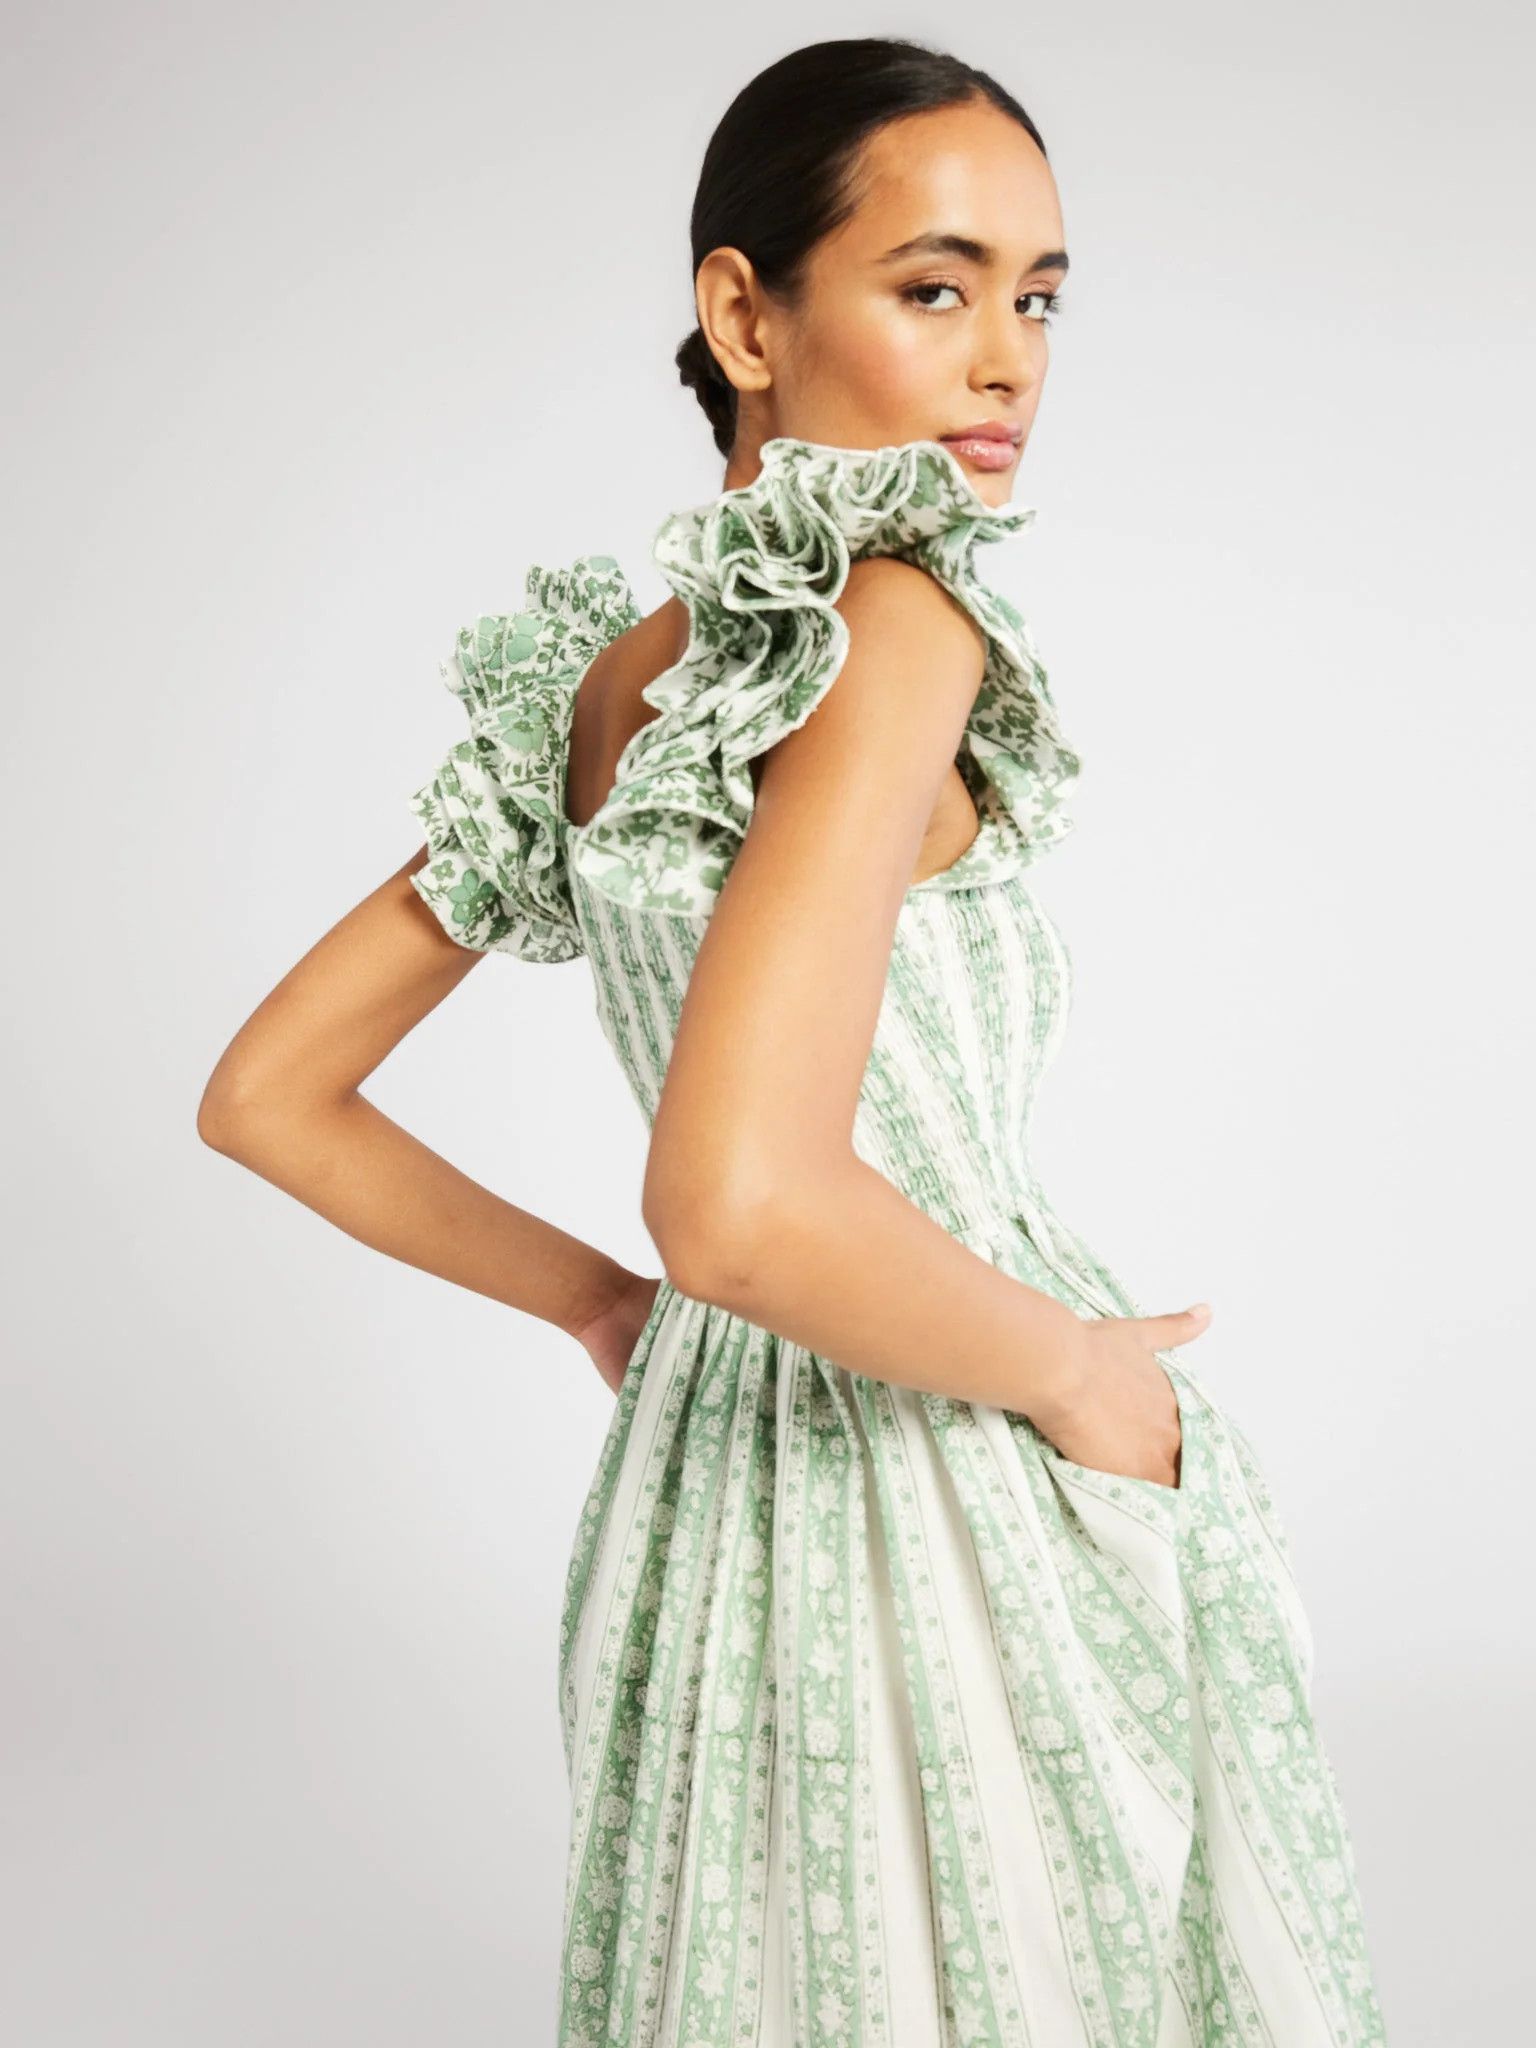 Shop Mille - Olympia Dress in Green Jaipur Stripe | Mille